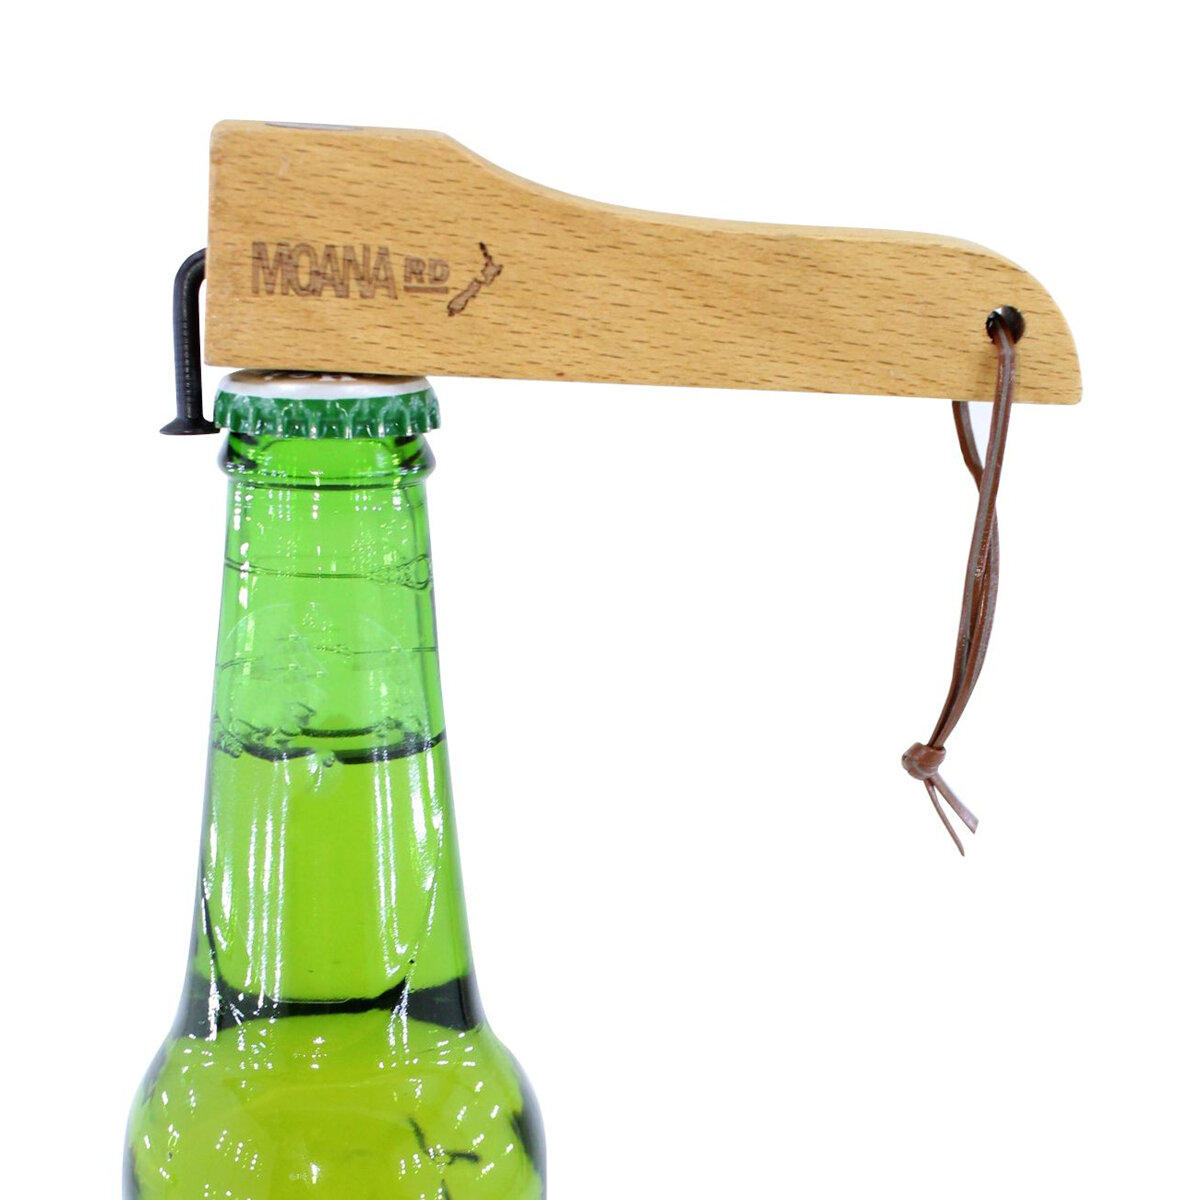 Moana Road Bottle Opener Wood Nail